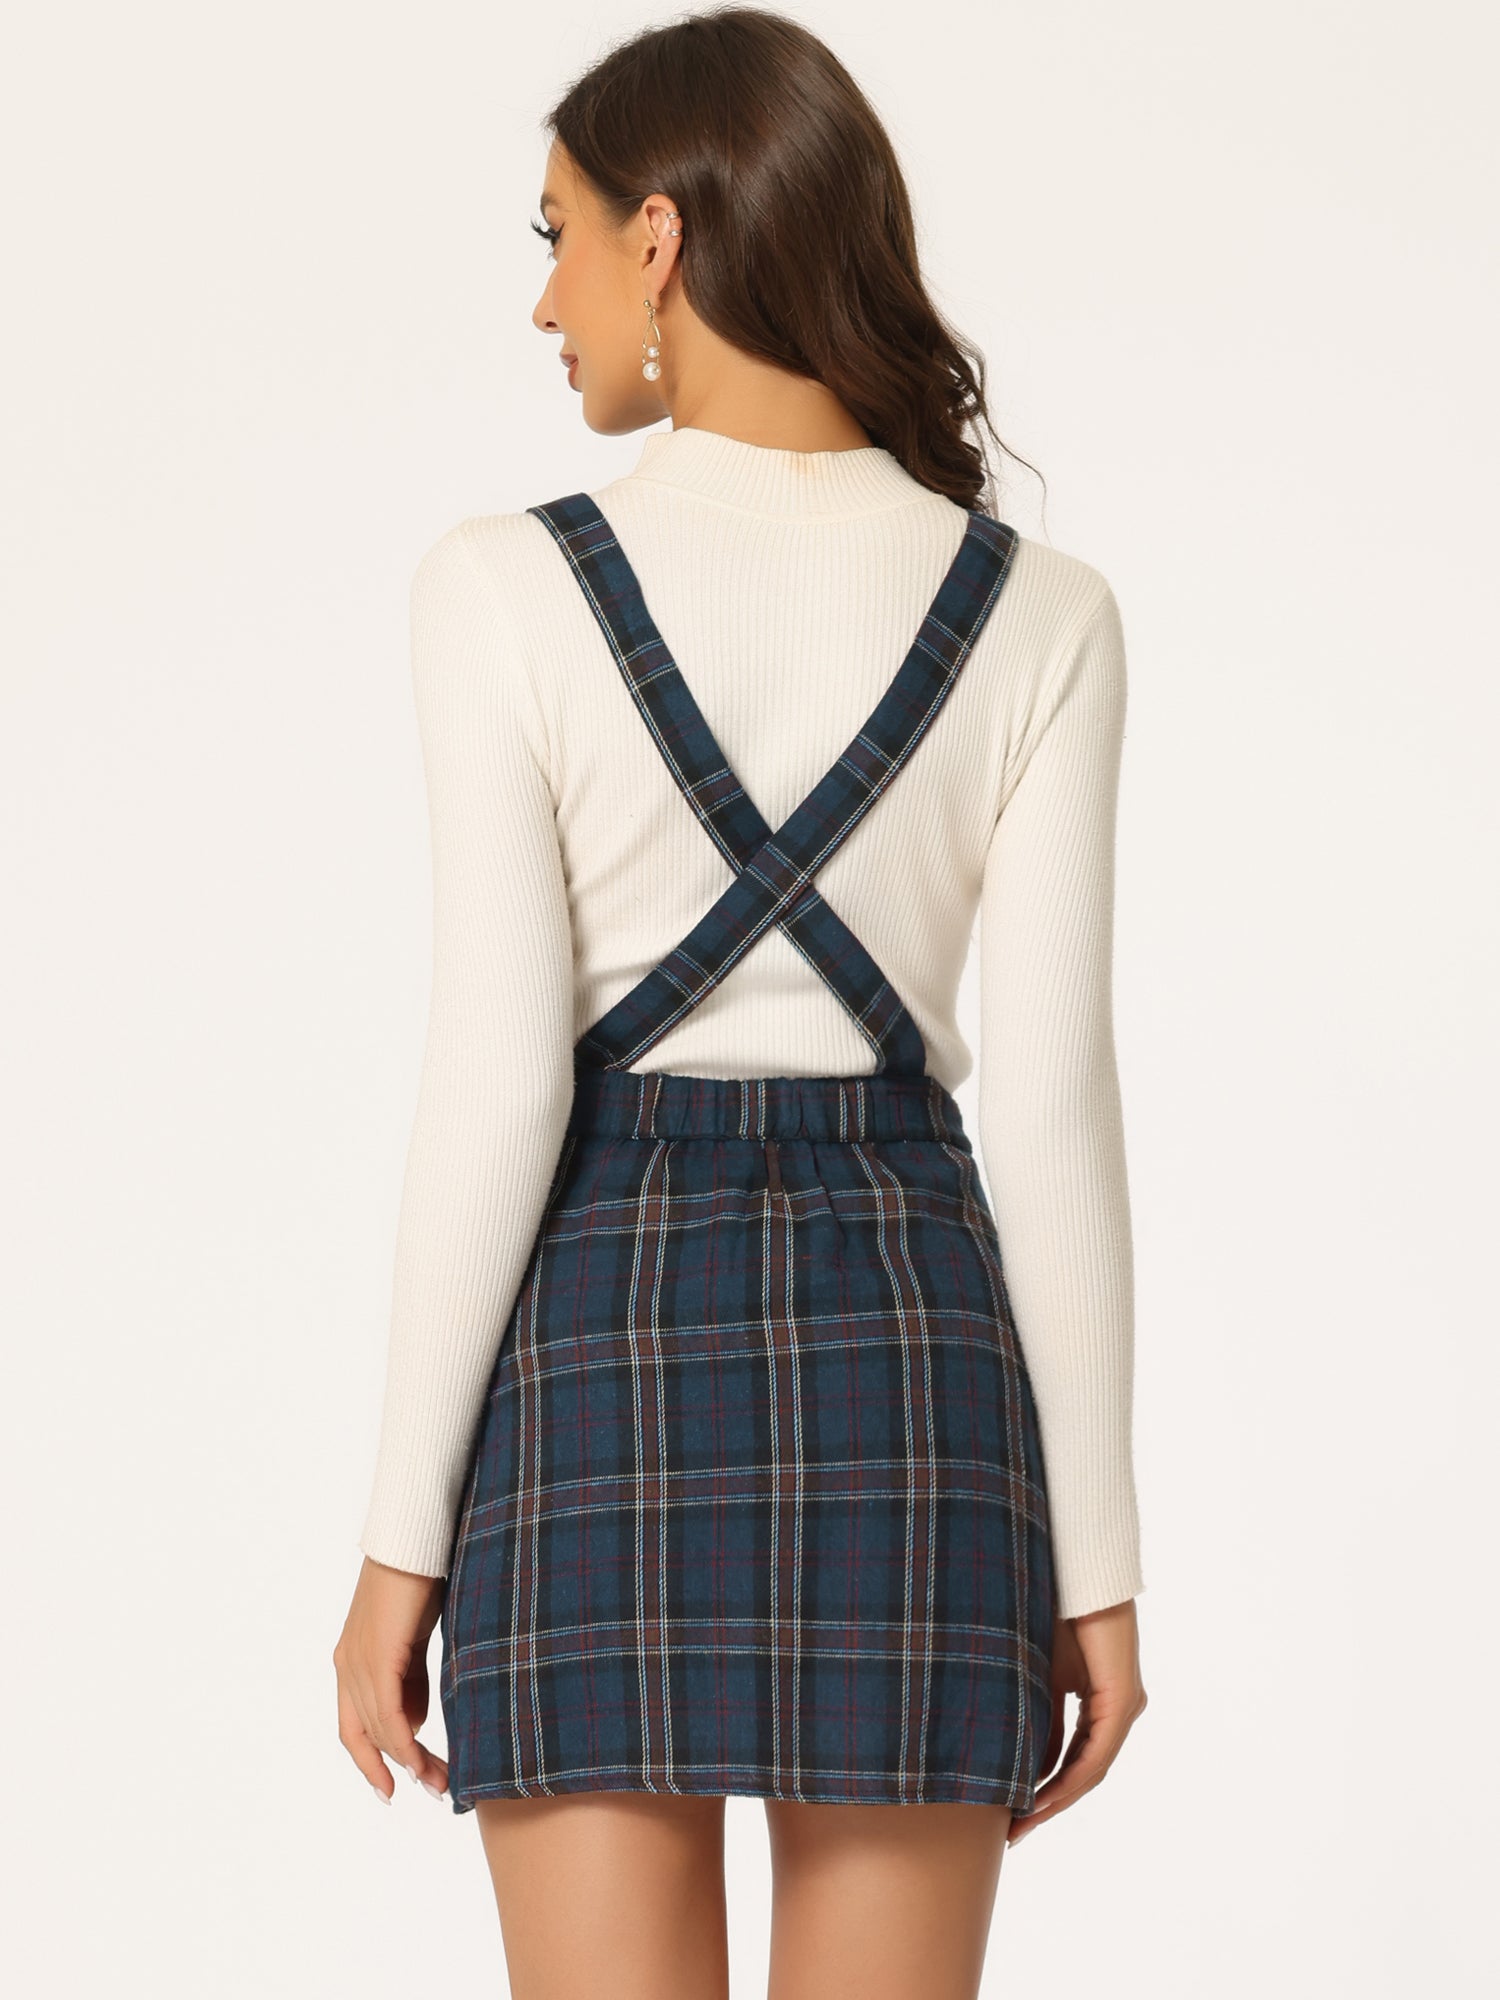 Allegra K Women's Suspender Skirt Adjustable Strap Pinafore